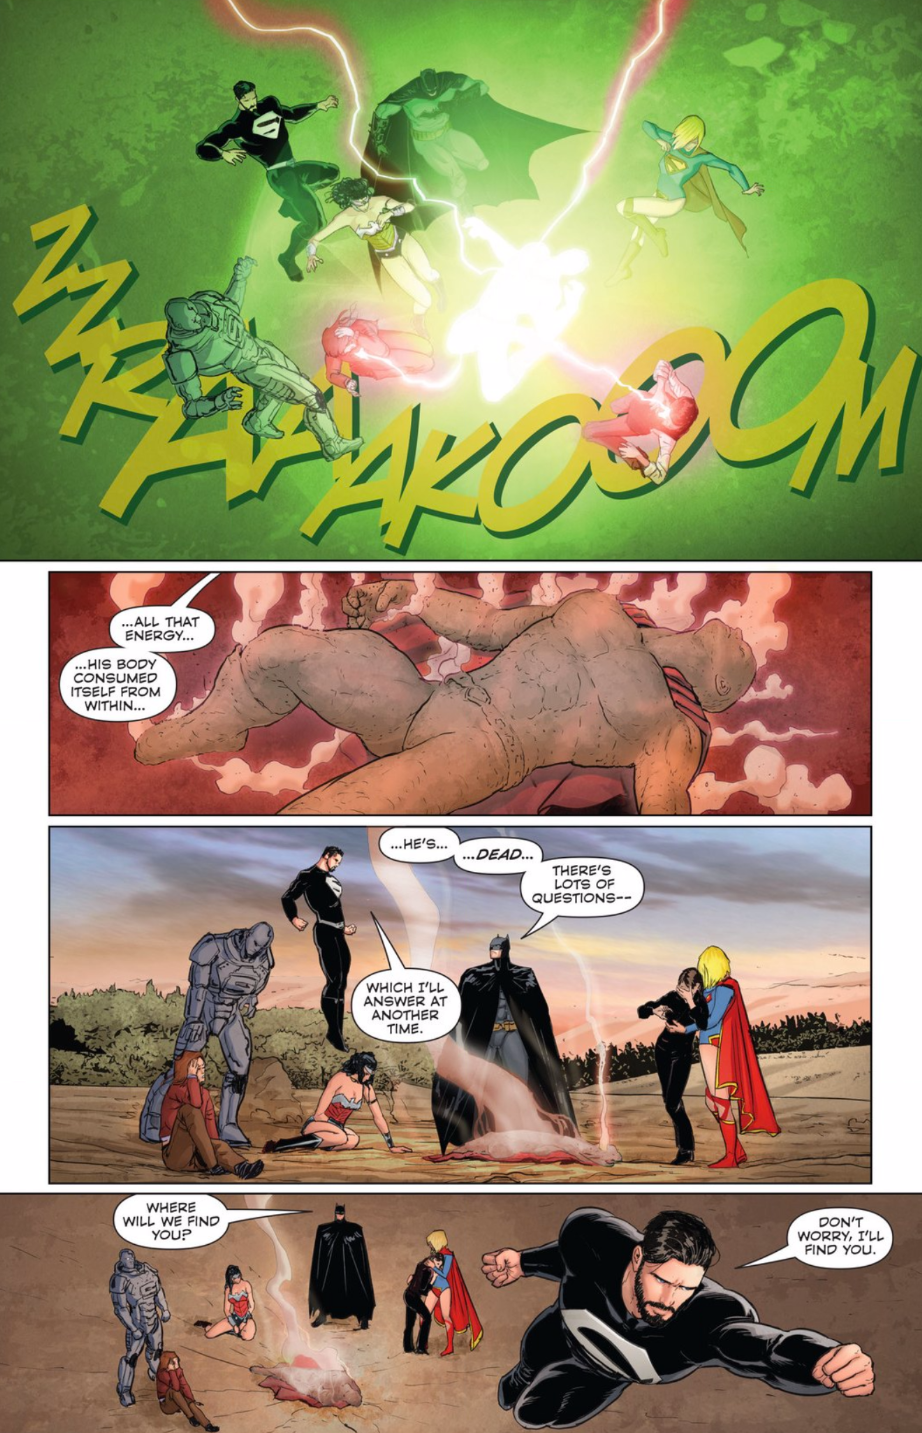 20 - [DC Comics] Superman: Discusión General - Página 10 Pmxp5wkhym7m6rtysmbn